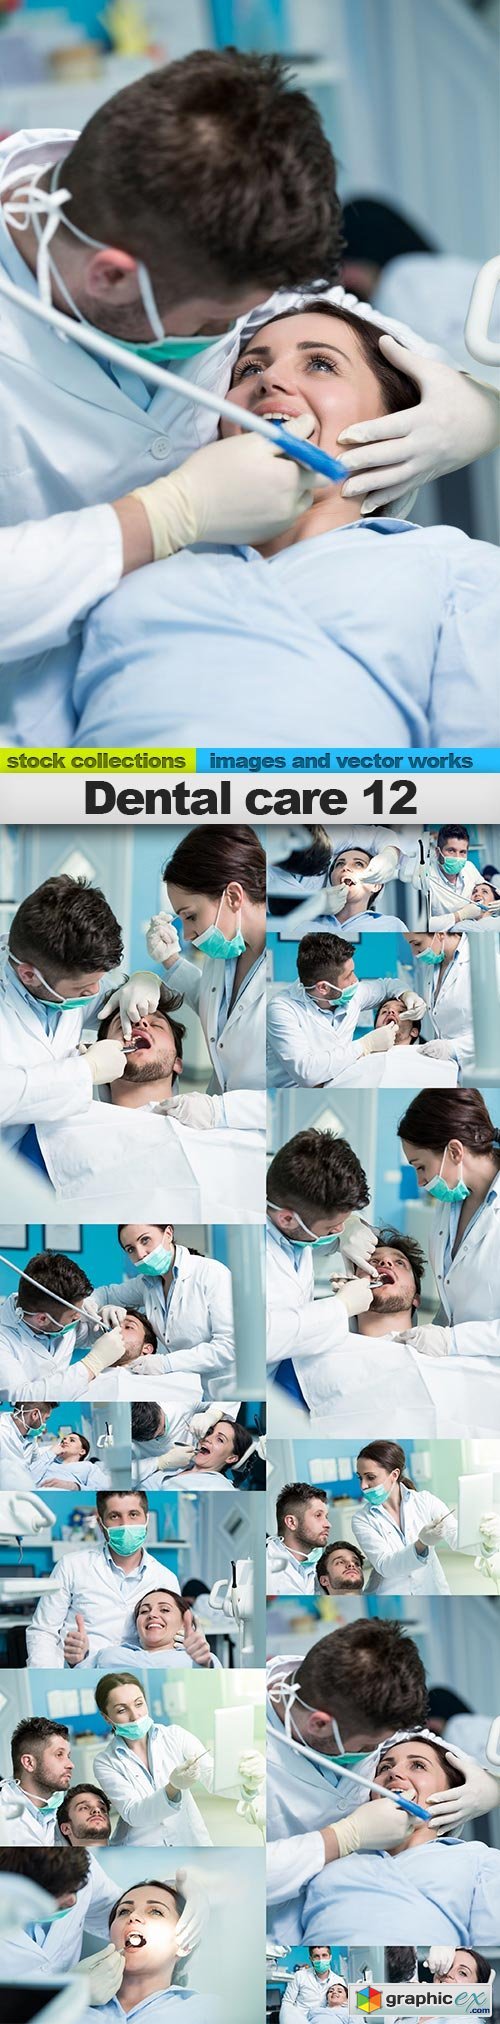 Dental care 12, 15 x UHQ JPEG